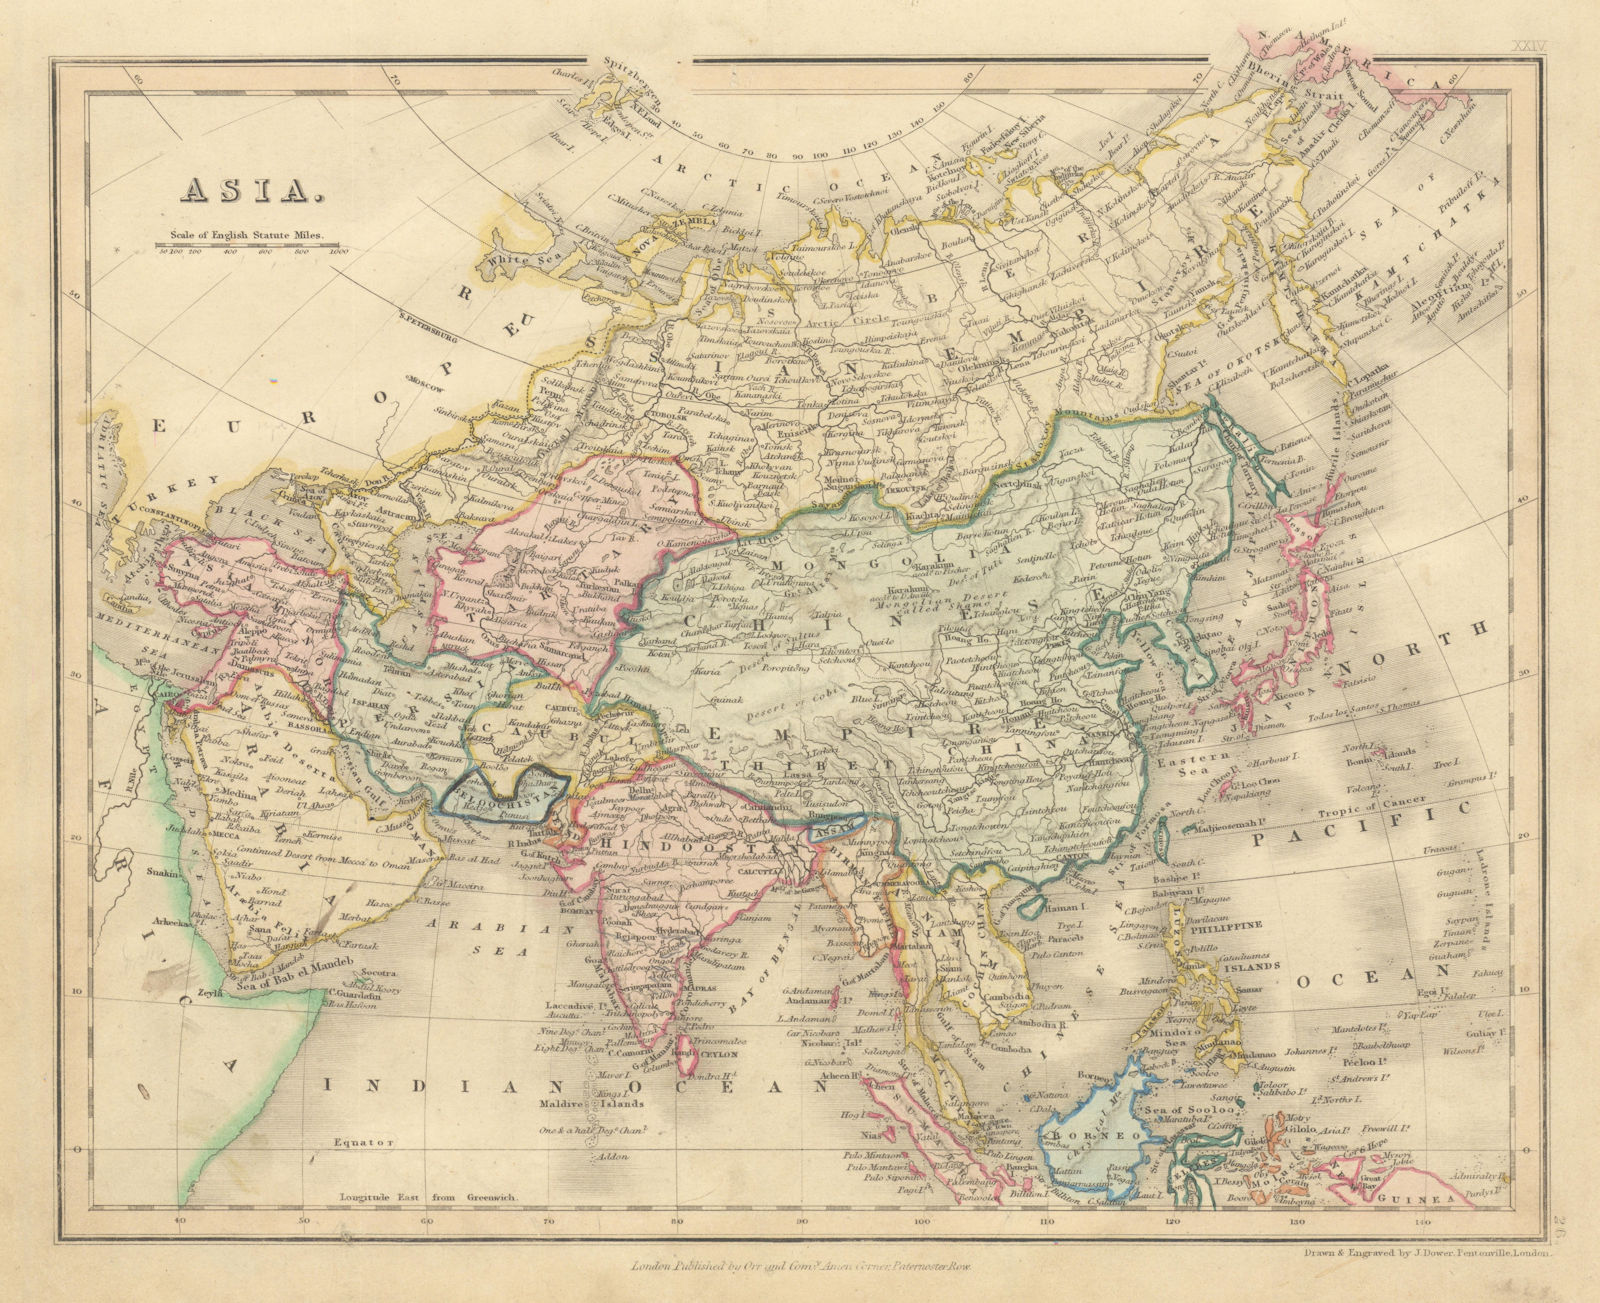 Asia by John Dower. Arabia Tartary Persia Siam Hindoostan Niphon 1845 old map